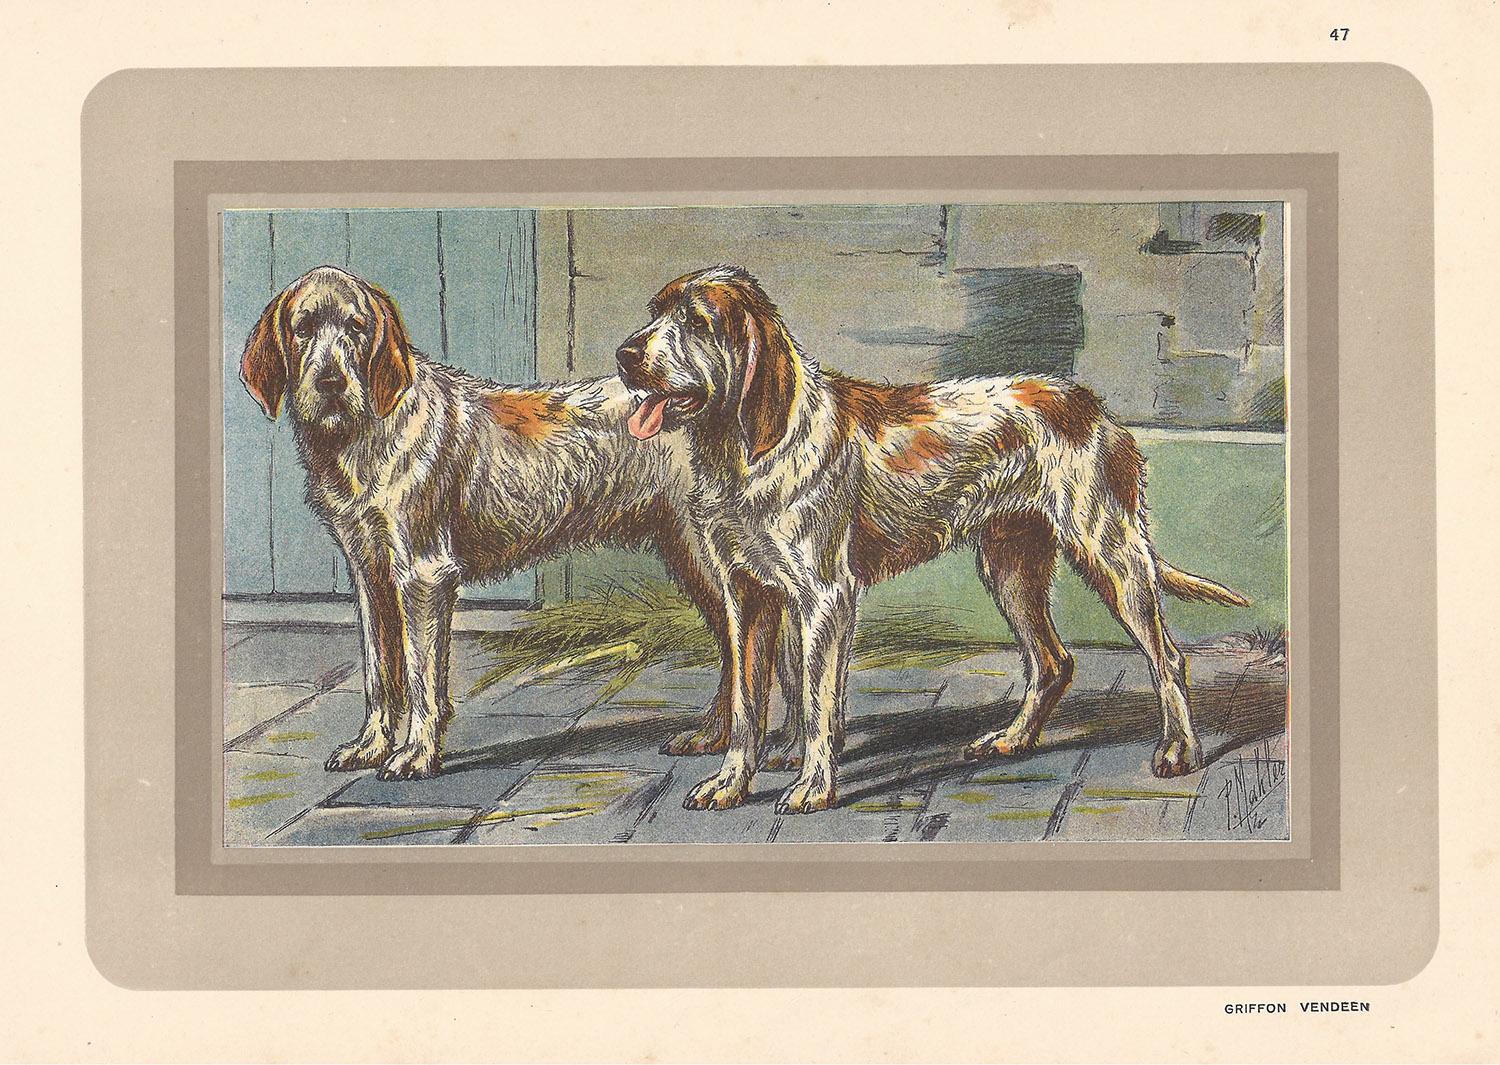 P. Mahler Animal Print - Griffon Vendeens, French hound, dog chromolithograph, 1930s